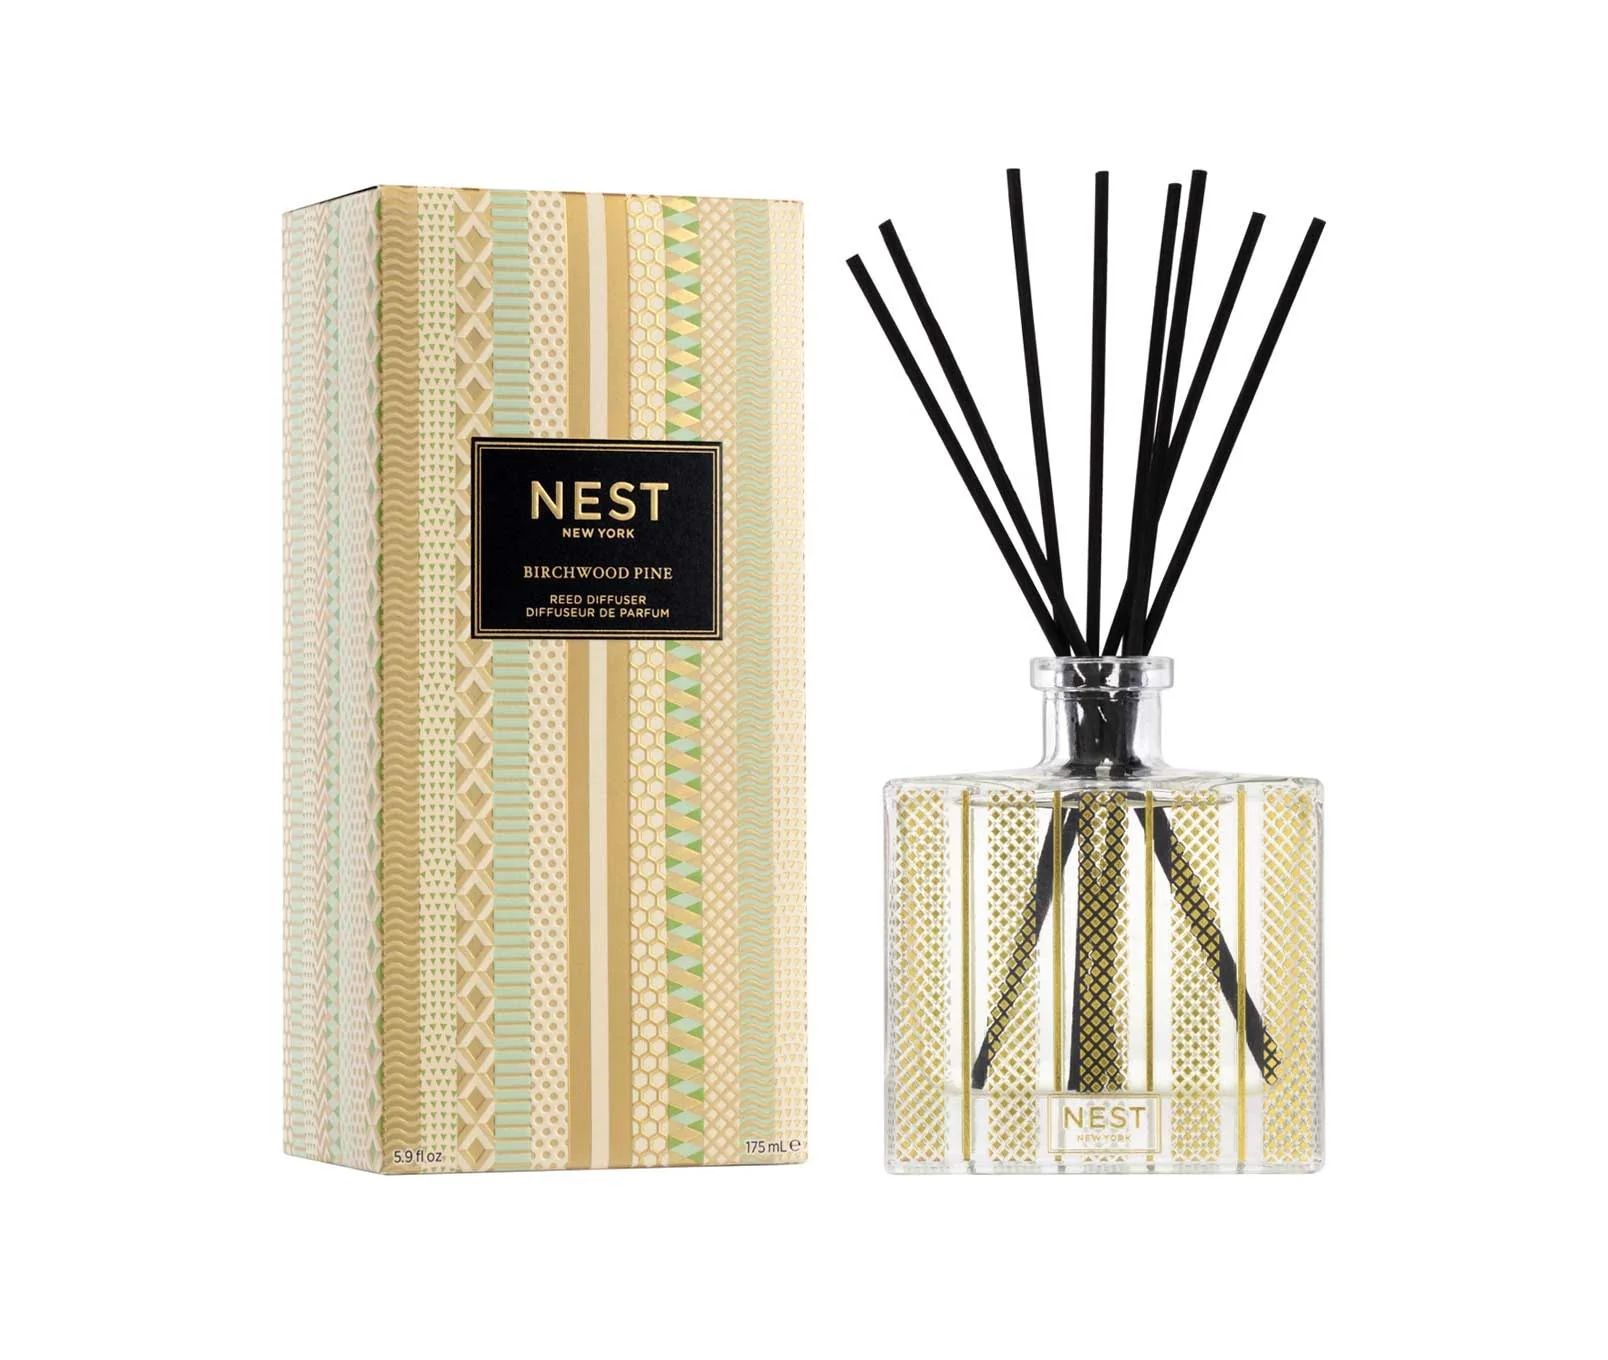 Birchwood Pine Reed Diffuser | NEST Fragrances